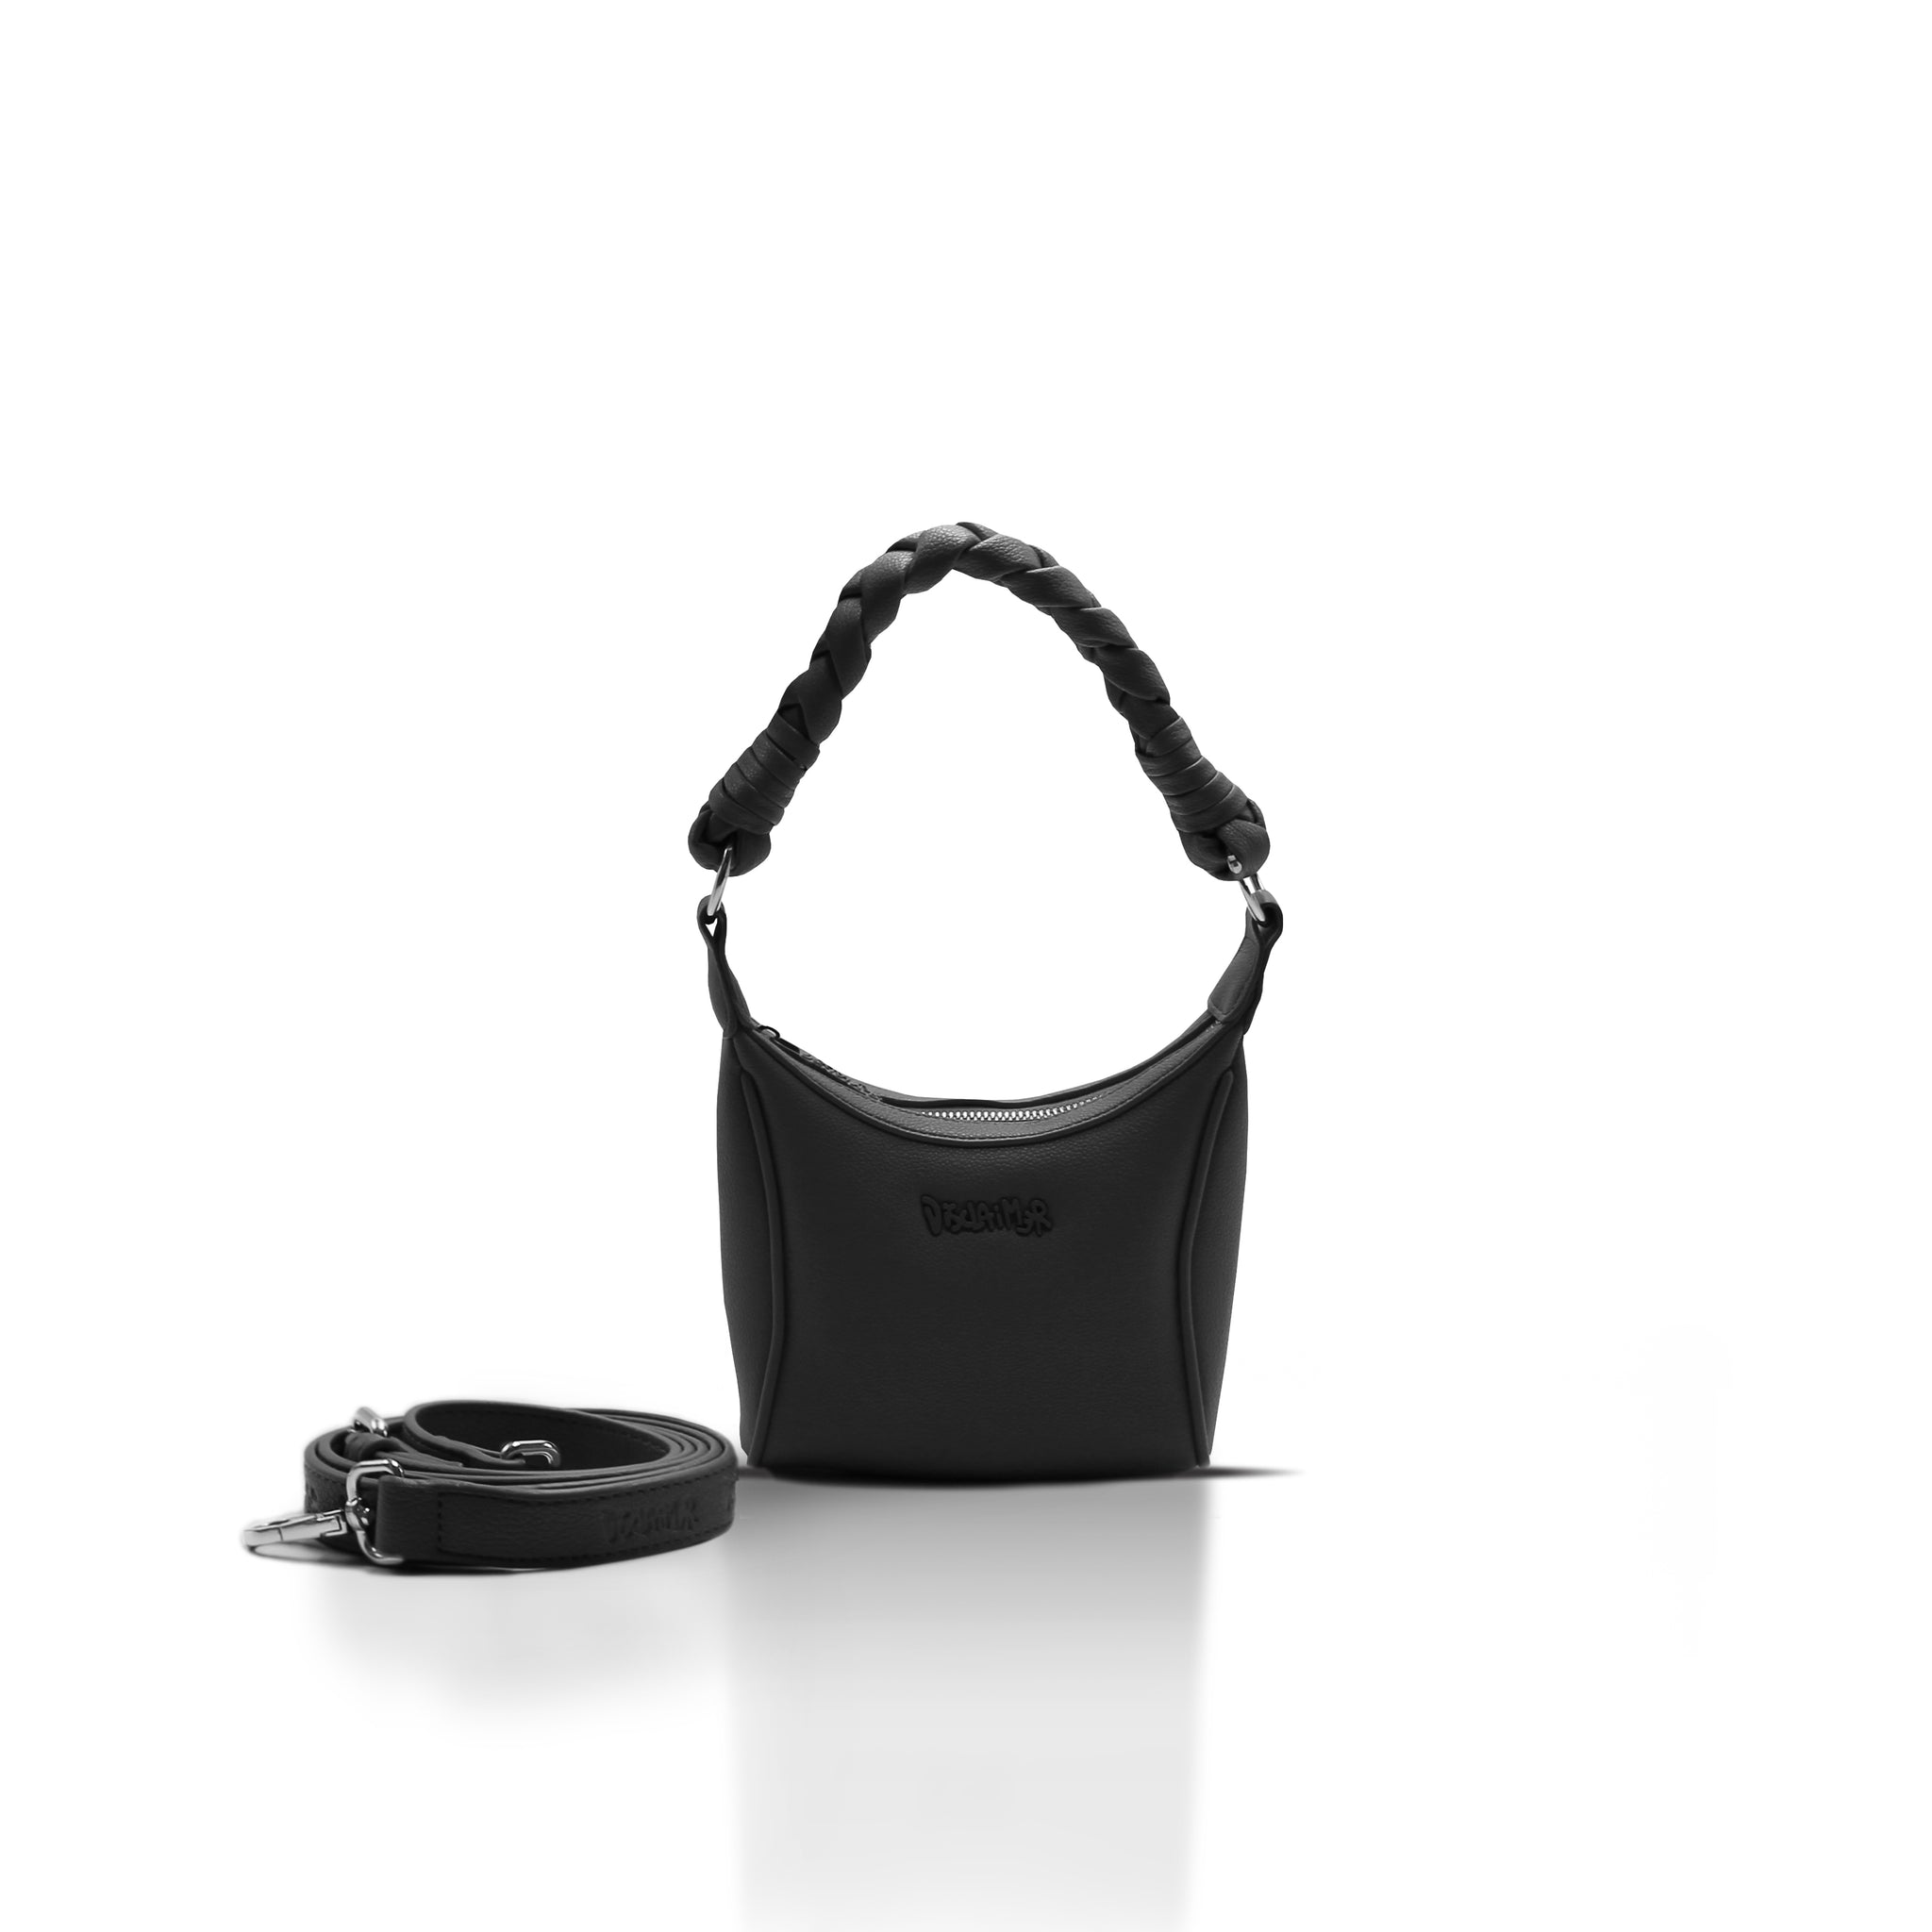 Mini bag in black eco leather